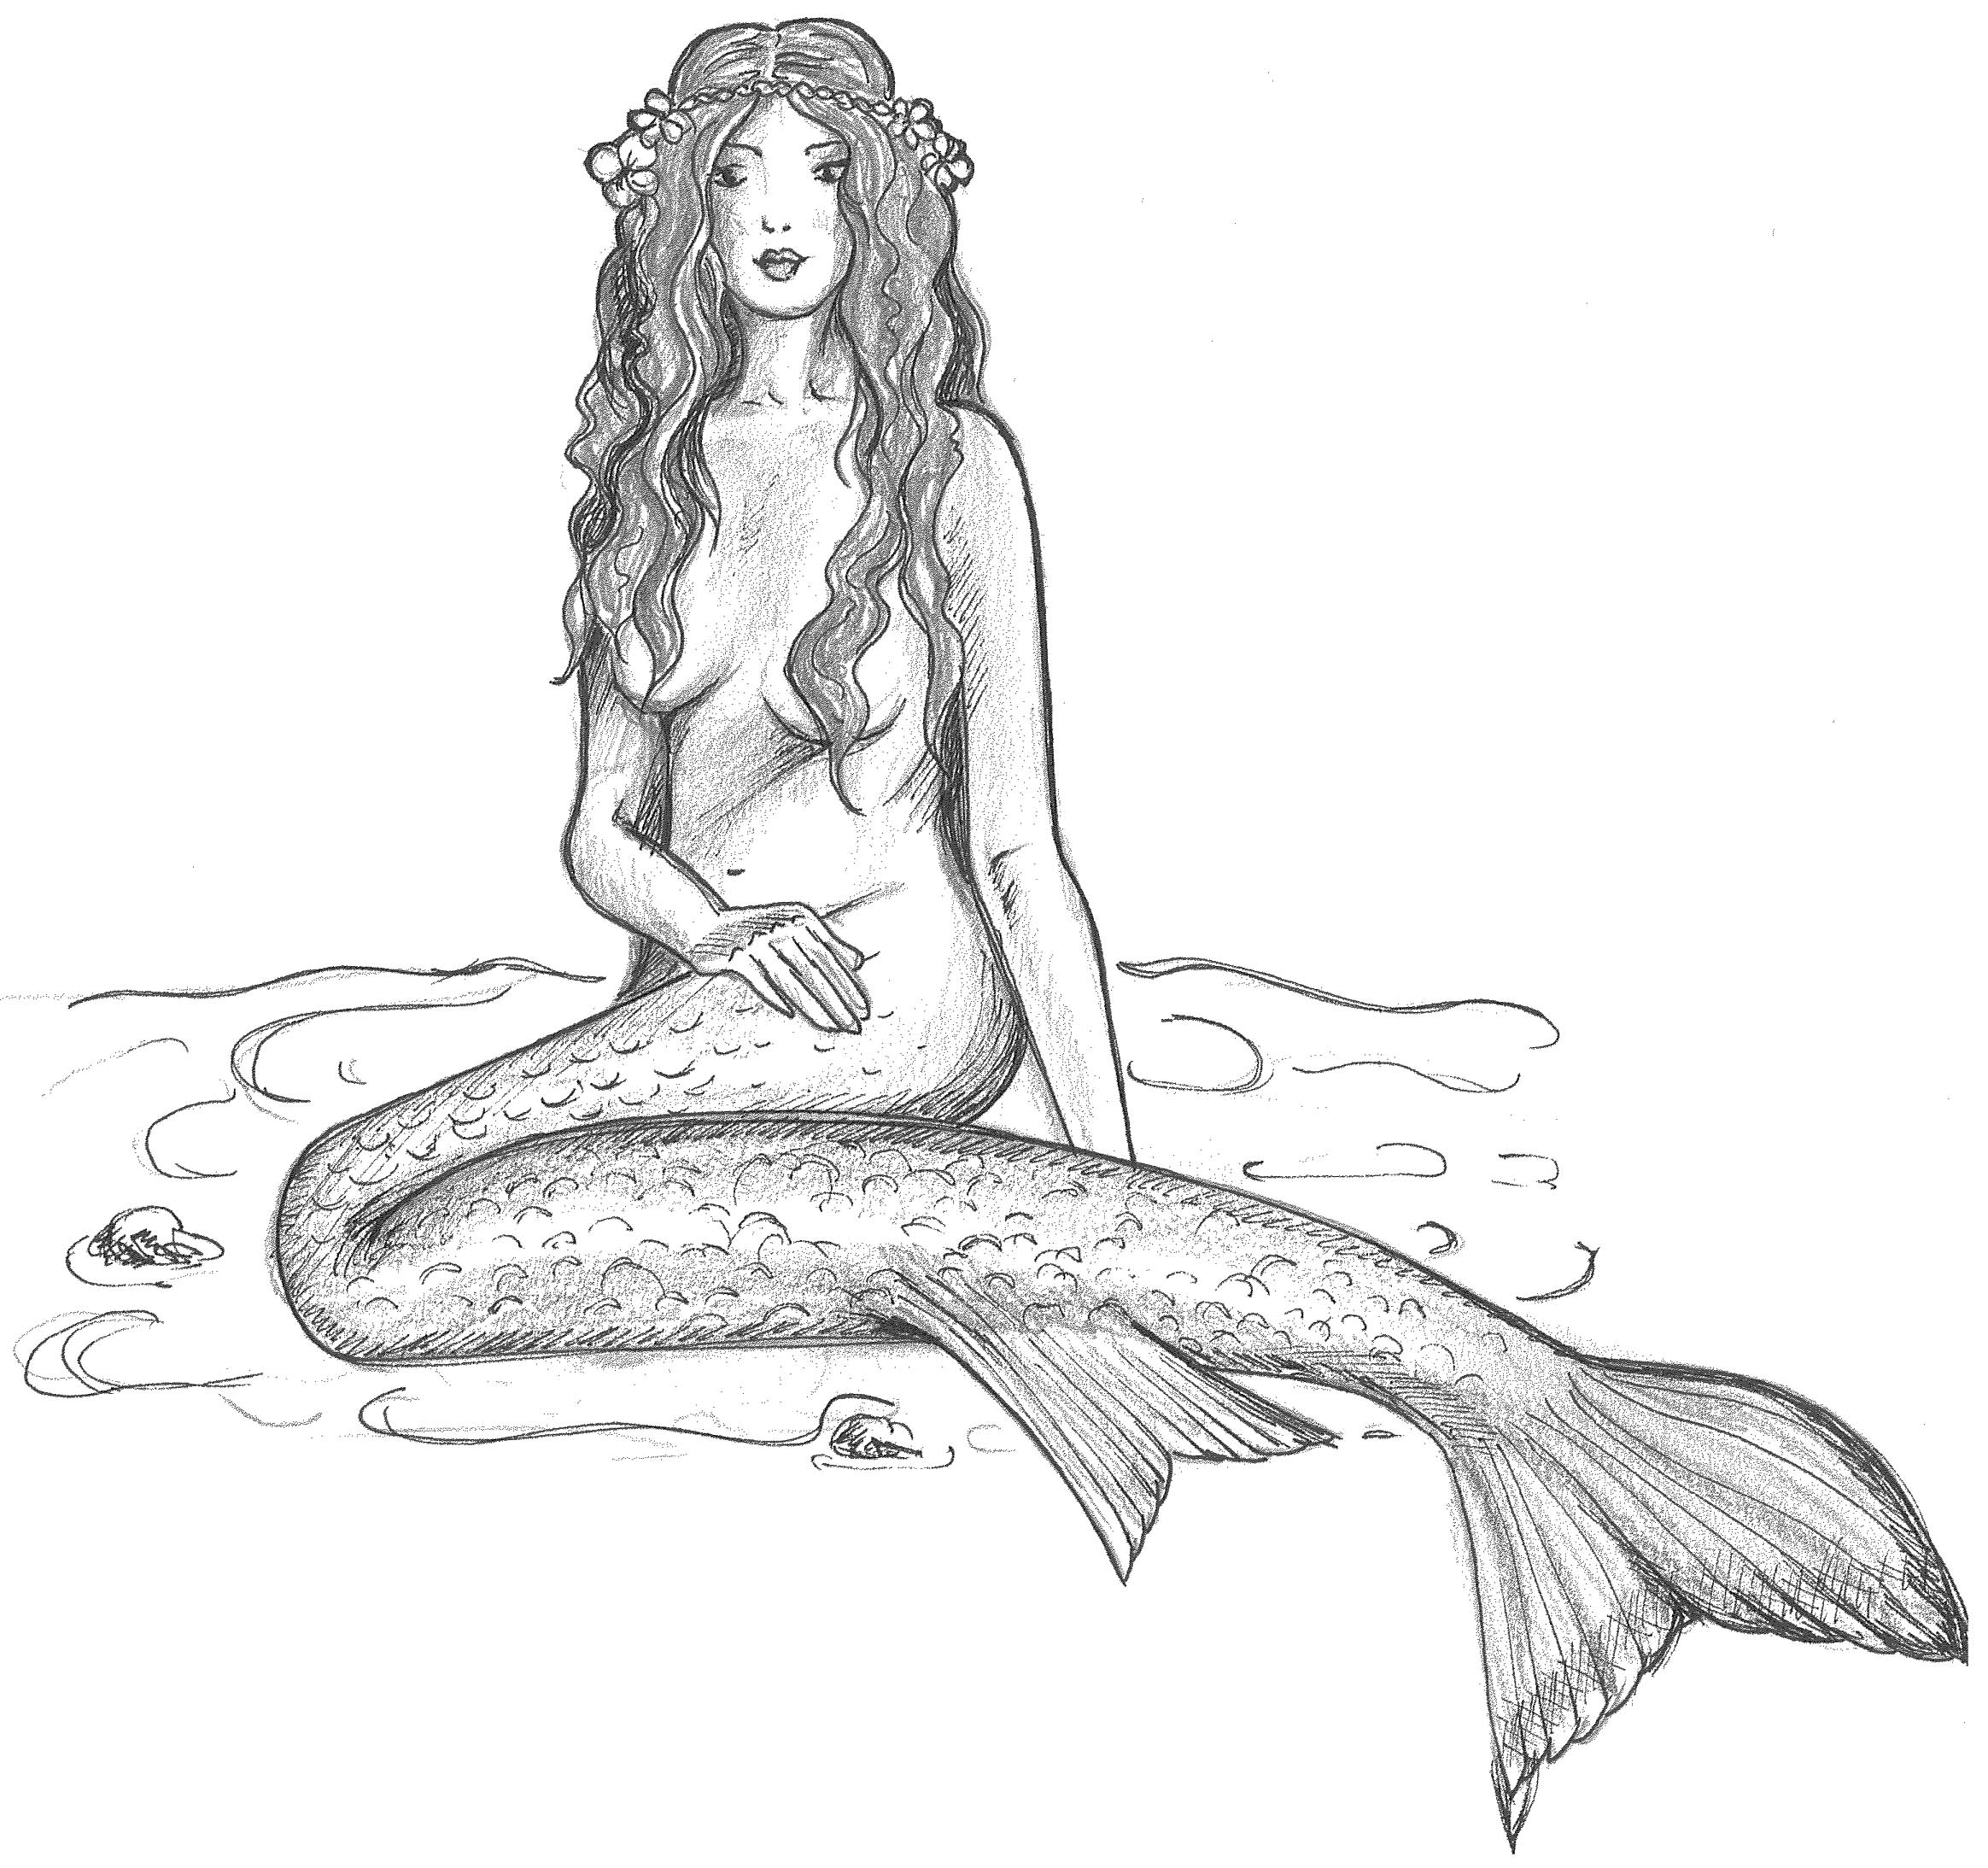 Mermaid01